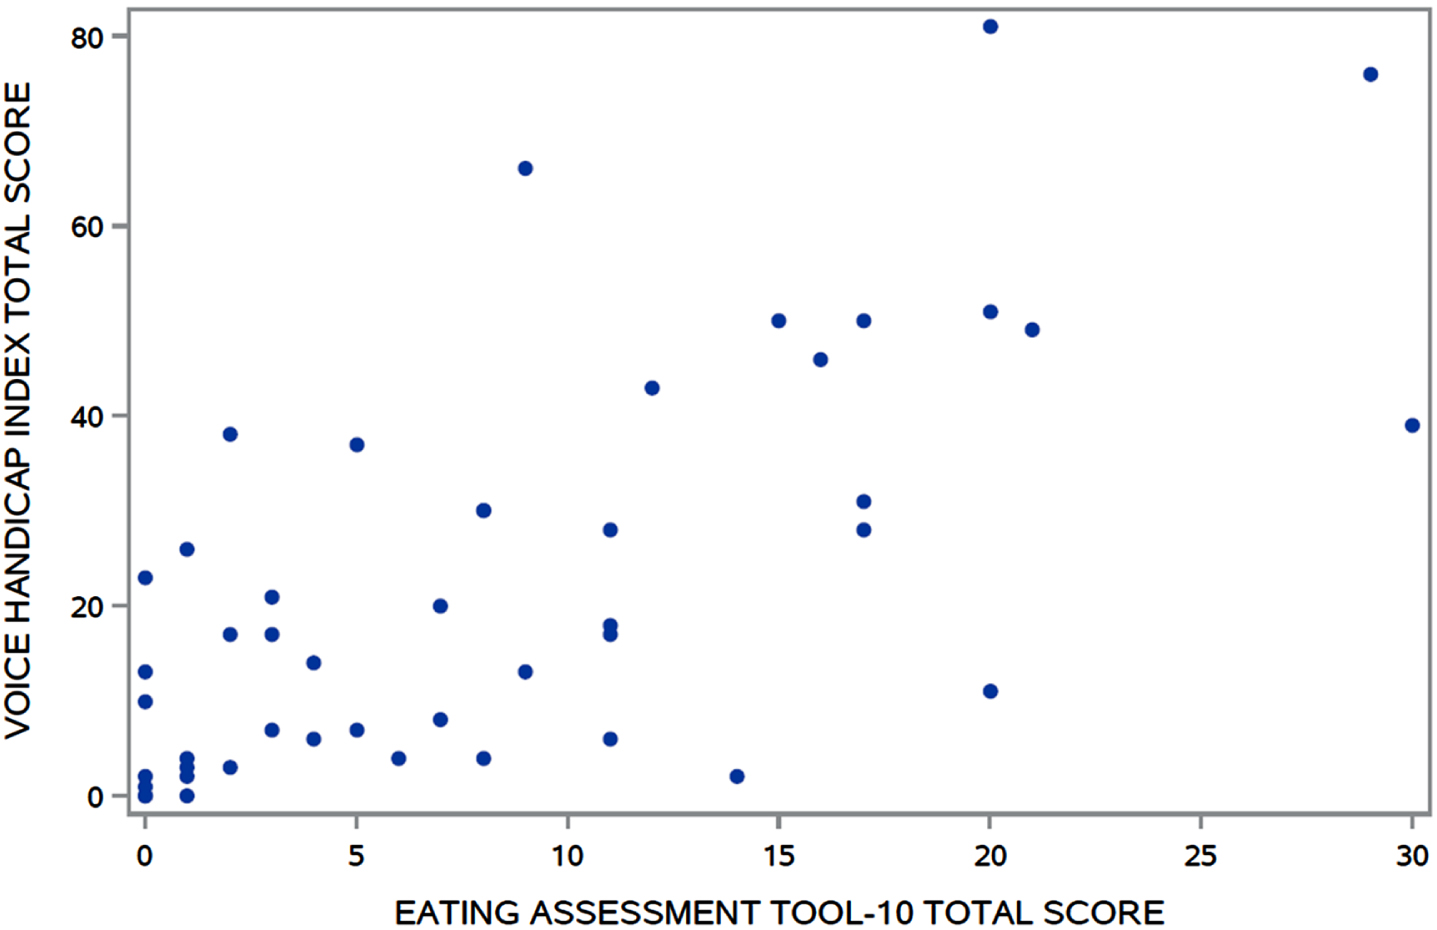 Association between VHI and EAT-10 total scores (r = 0.66, p < 0.0001). VHI, Voice Handicap Index; EAT-10, Eating Assessment Tool-10.